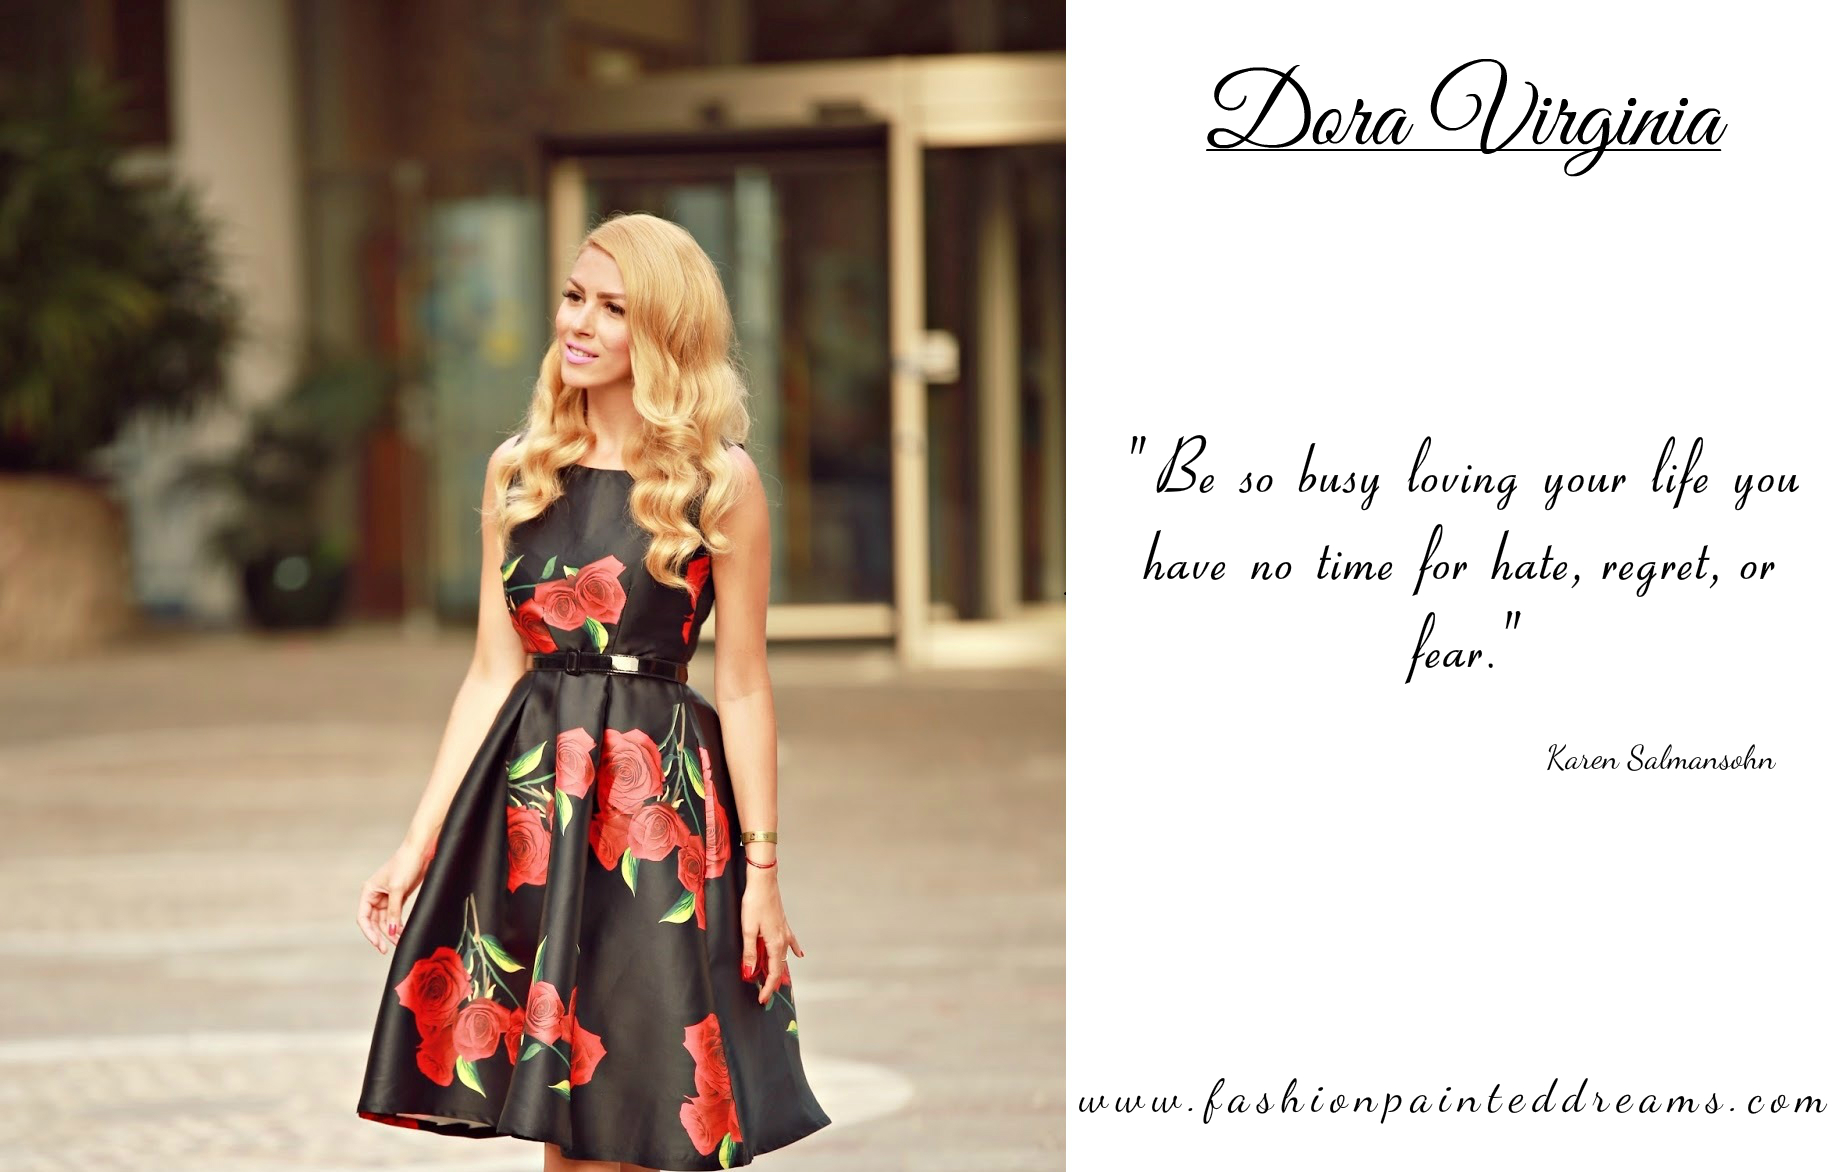 interviu moda Dora Fashion Painted Dreams